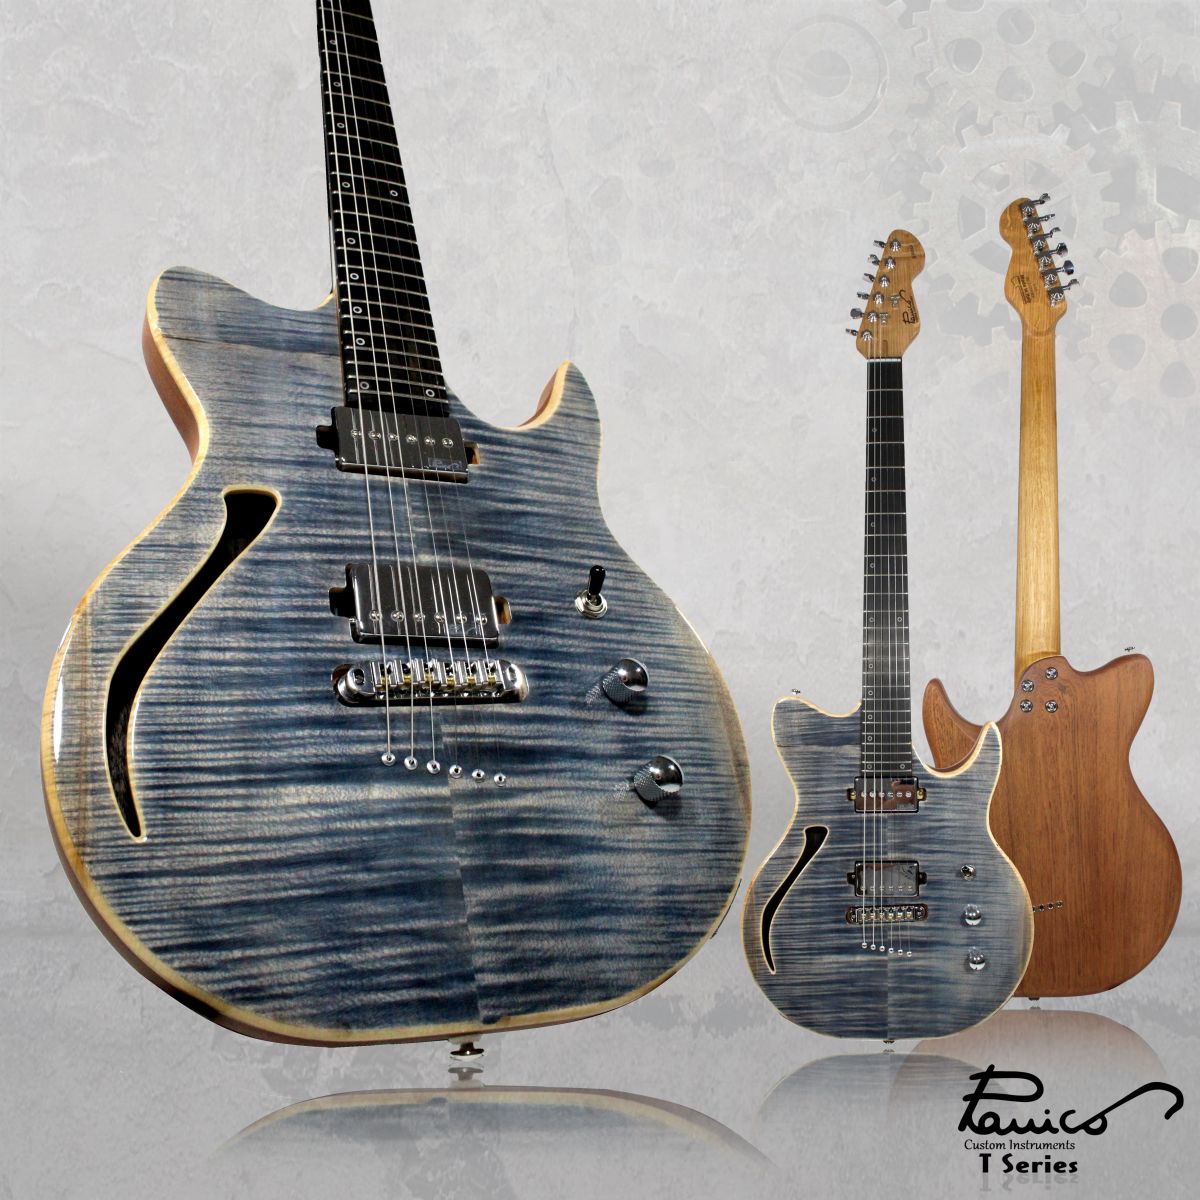 Panico-Guitars-S-Series-S569-2.jpg